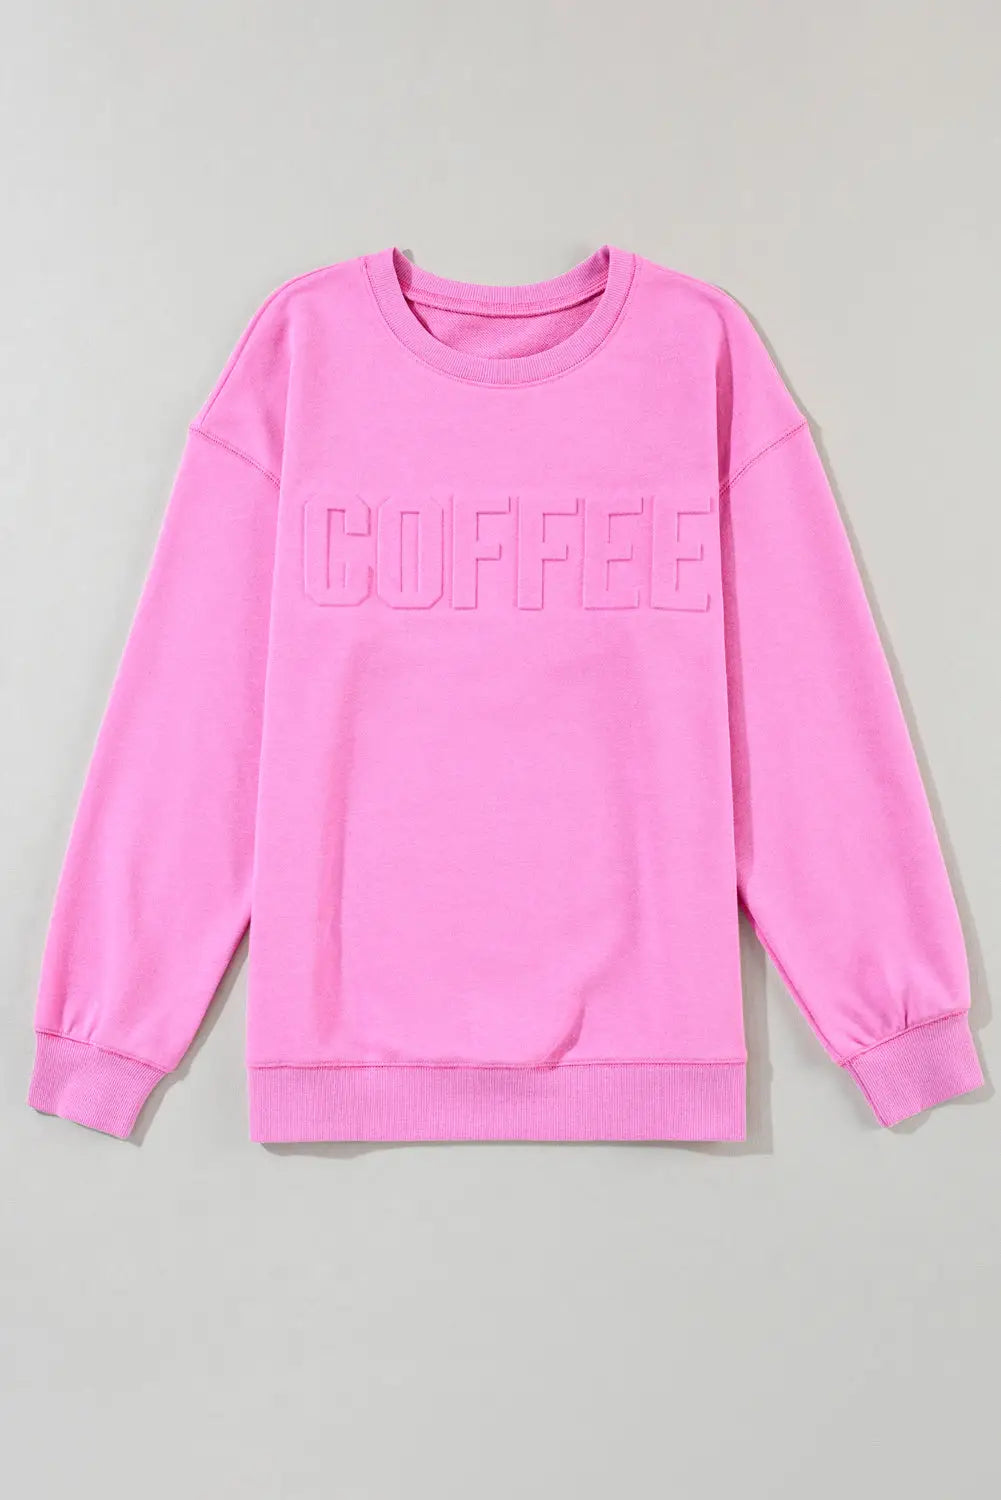 Bonbon coffee letter embossed casual sweatshirt - tops